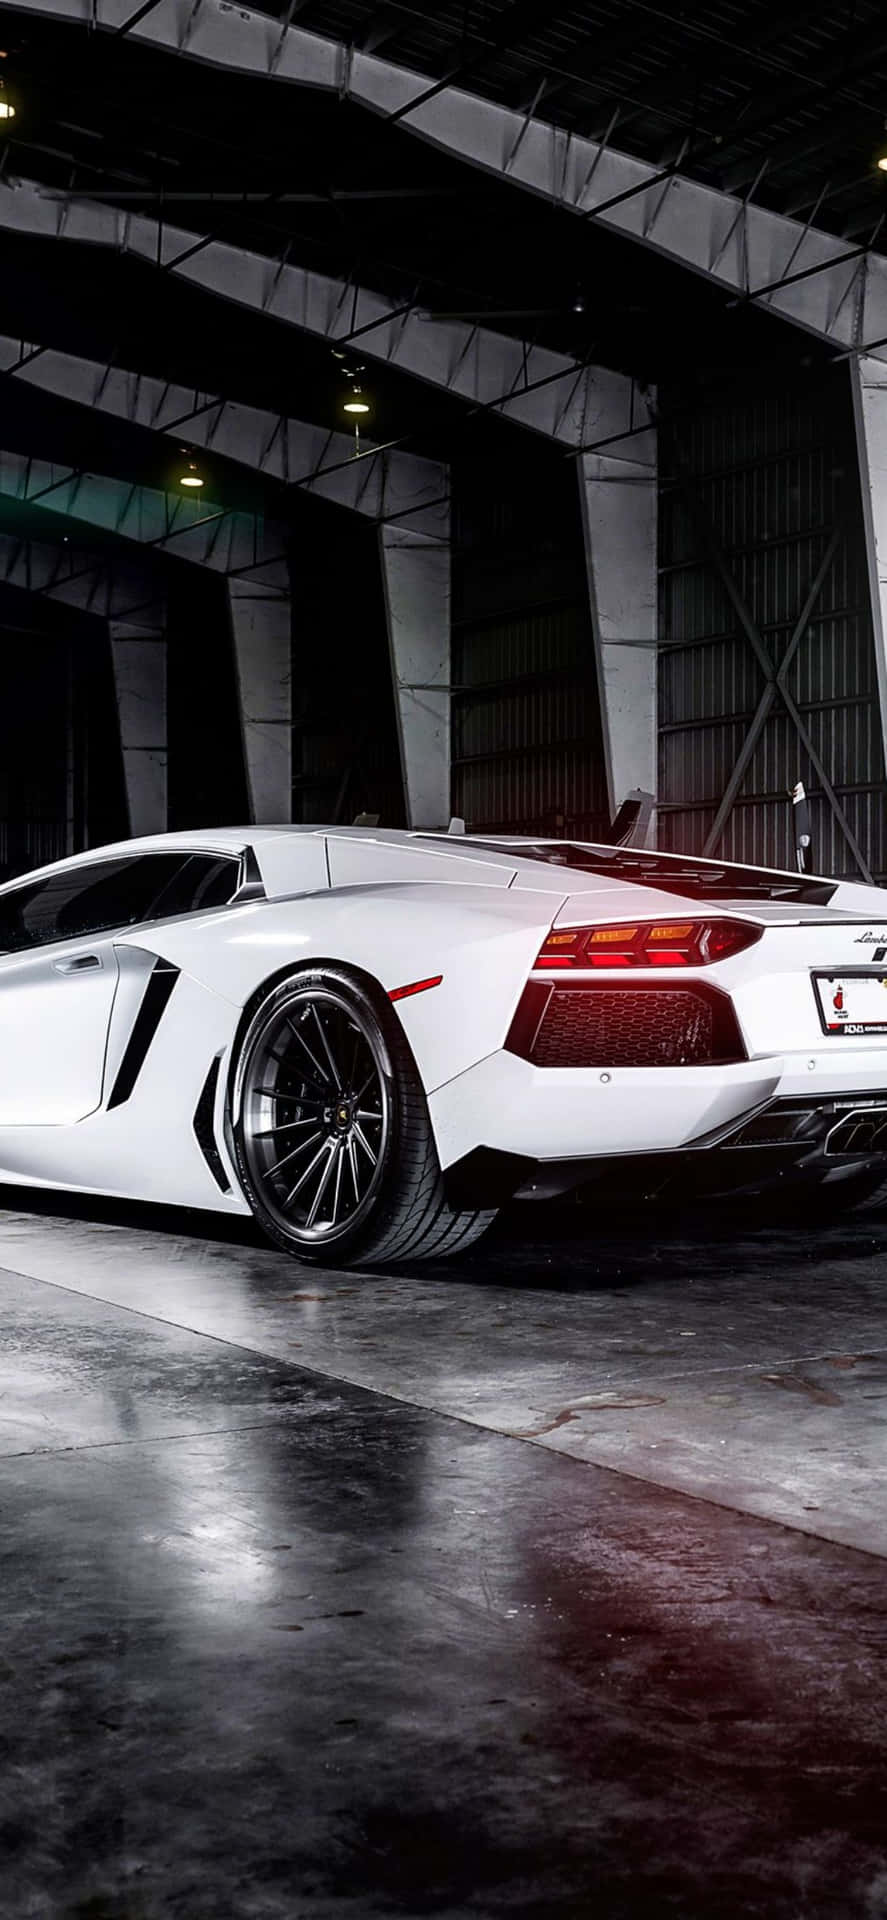 A White Lamborghini Parked In A Garage